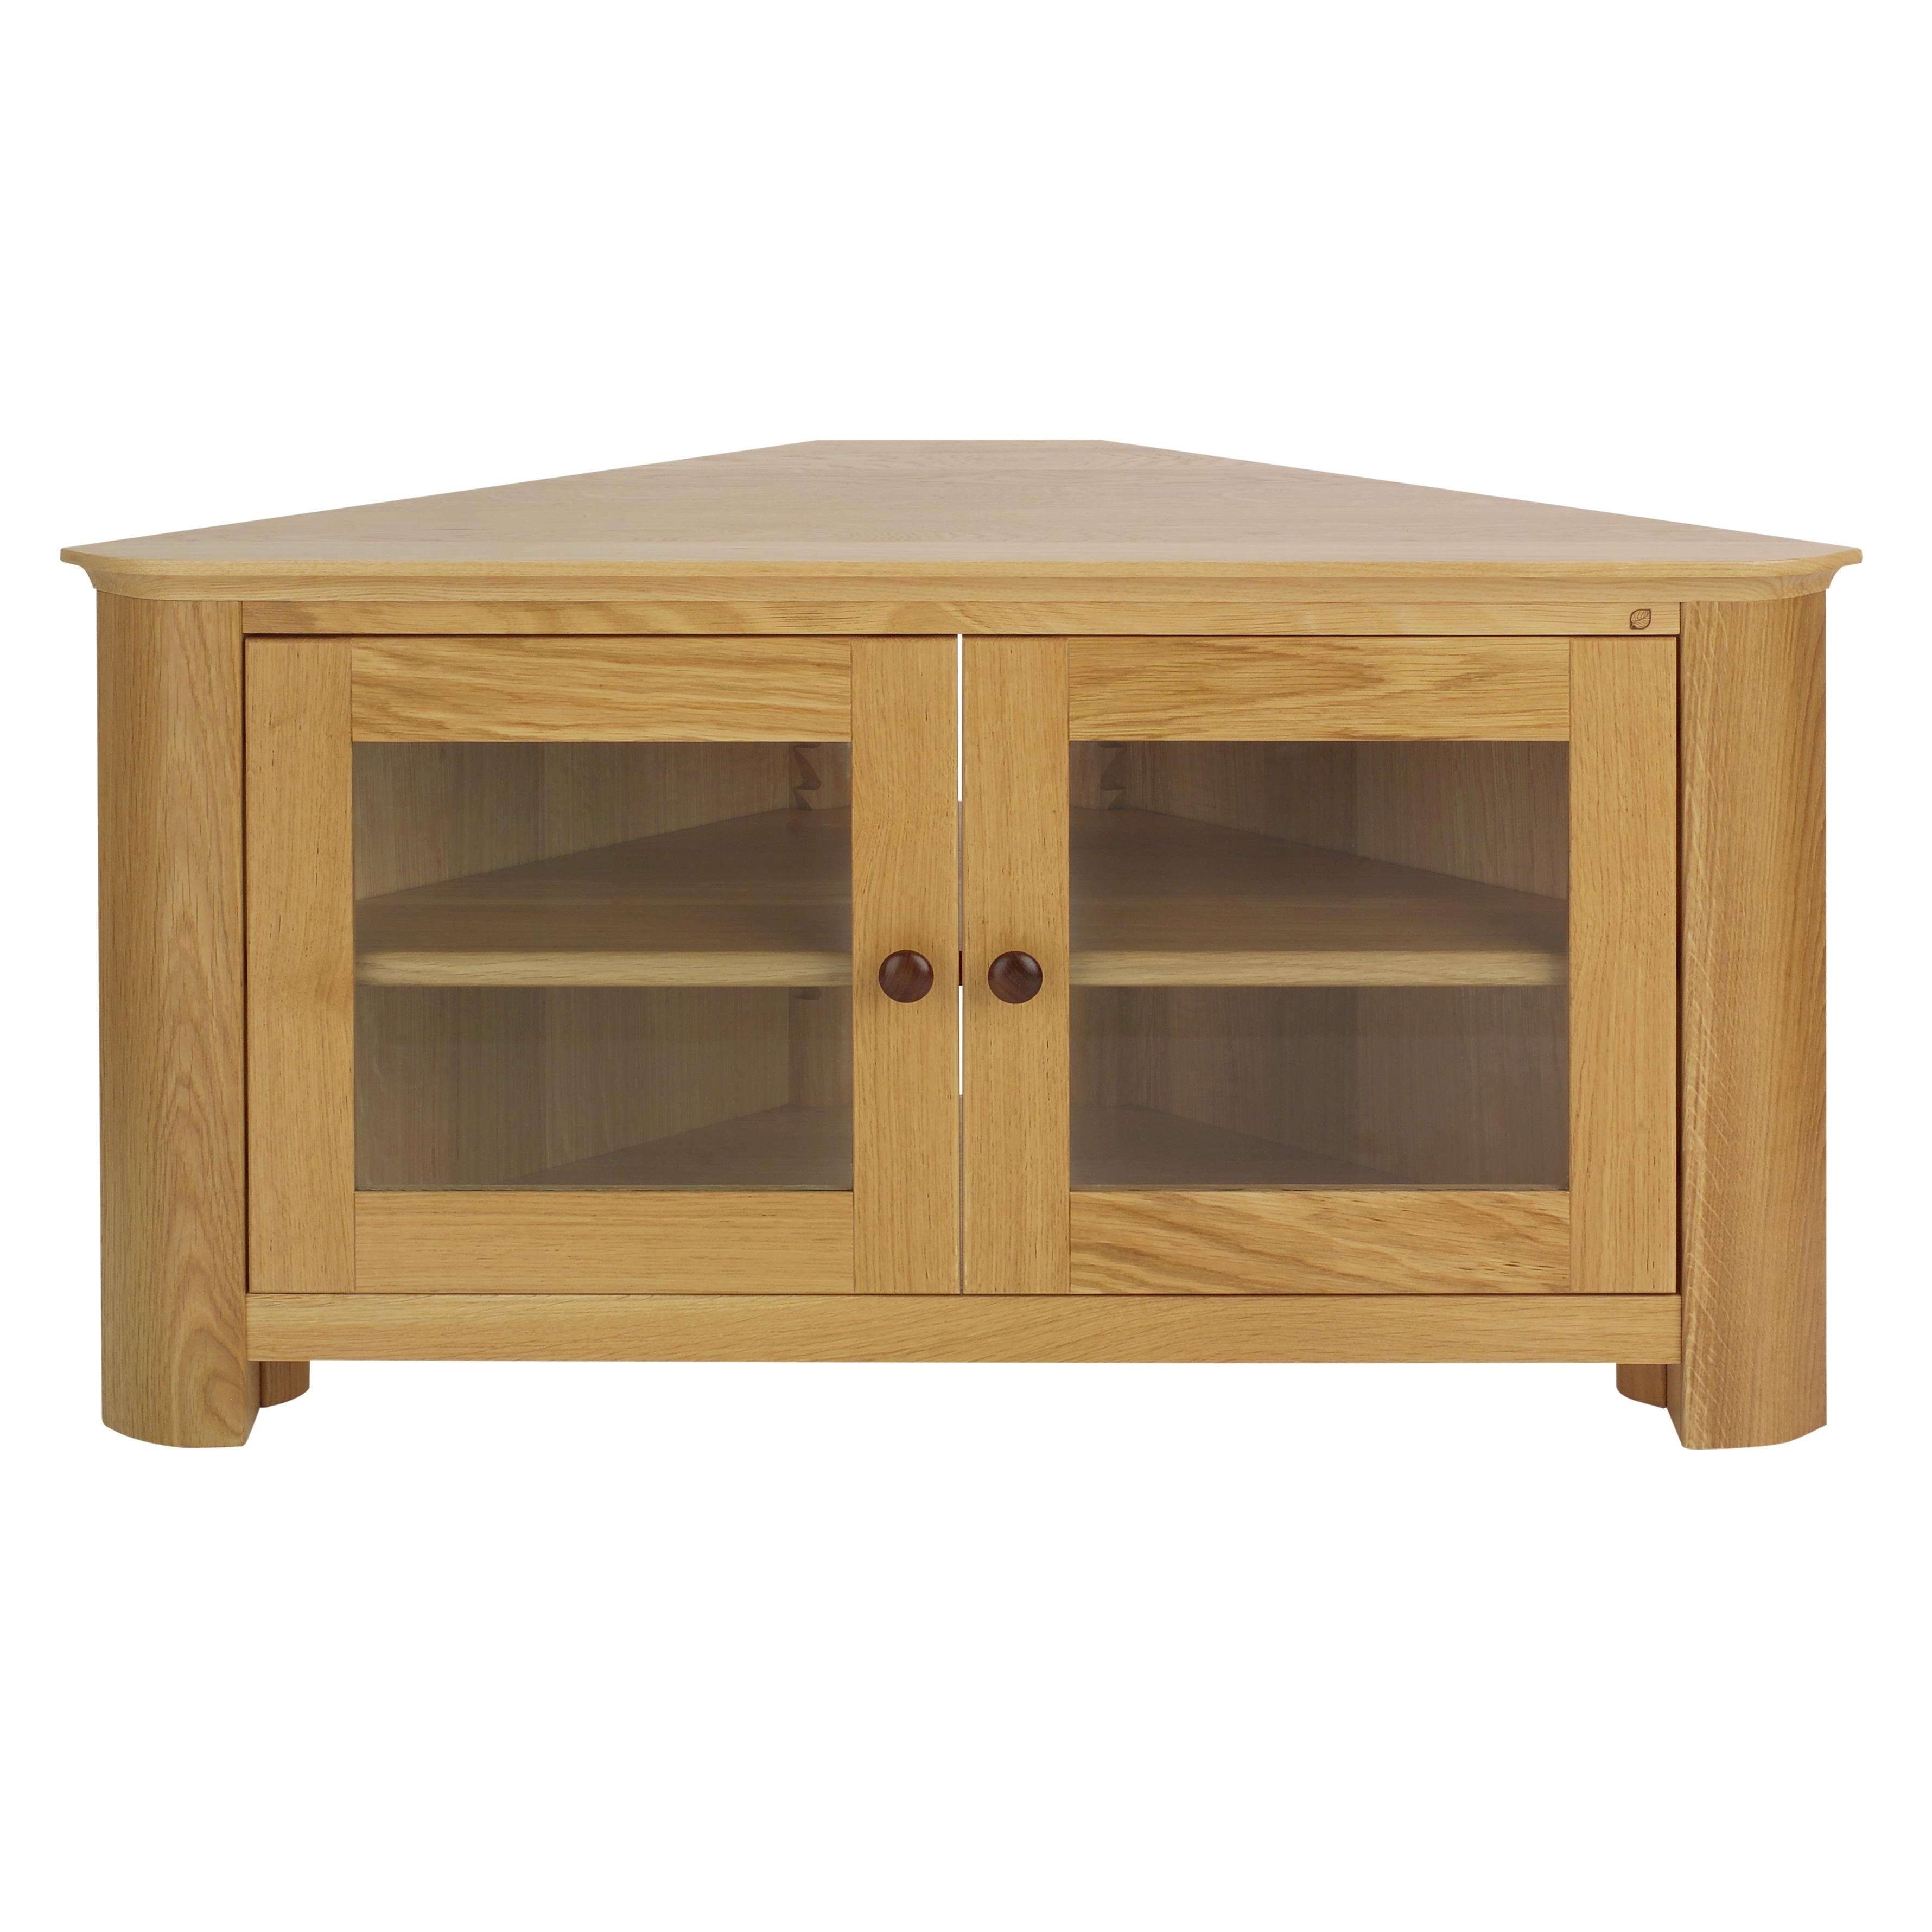 Media Cabinets With Doors Furniture Un Varnish Teak Wood Cabinet With Wooden Tv Cabinets With Glass Doors (View 2 of 20)